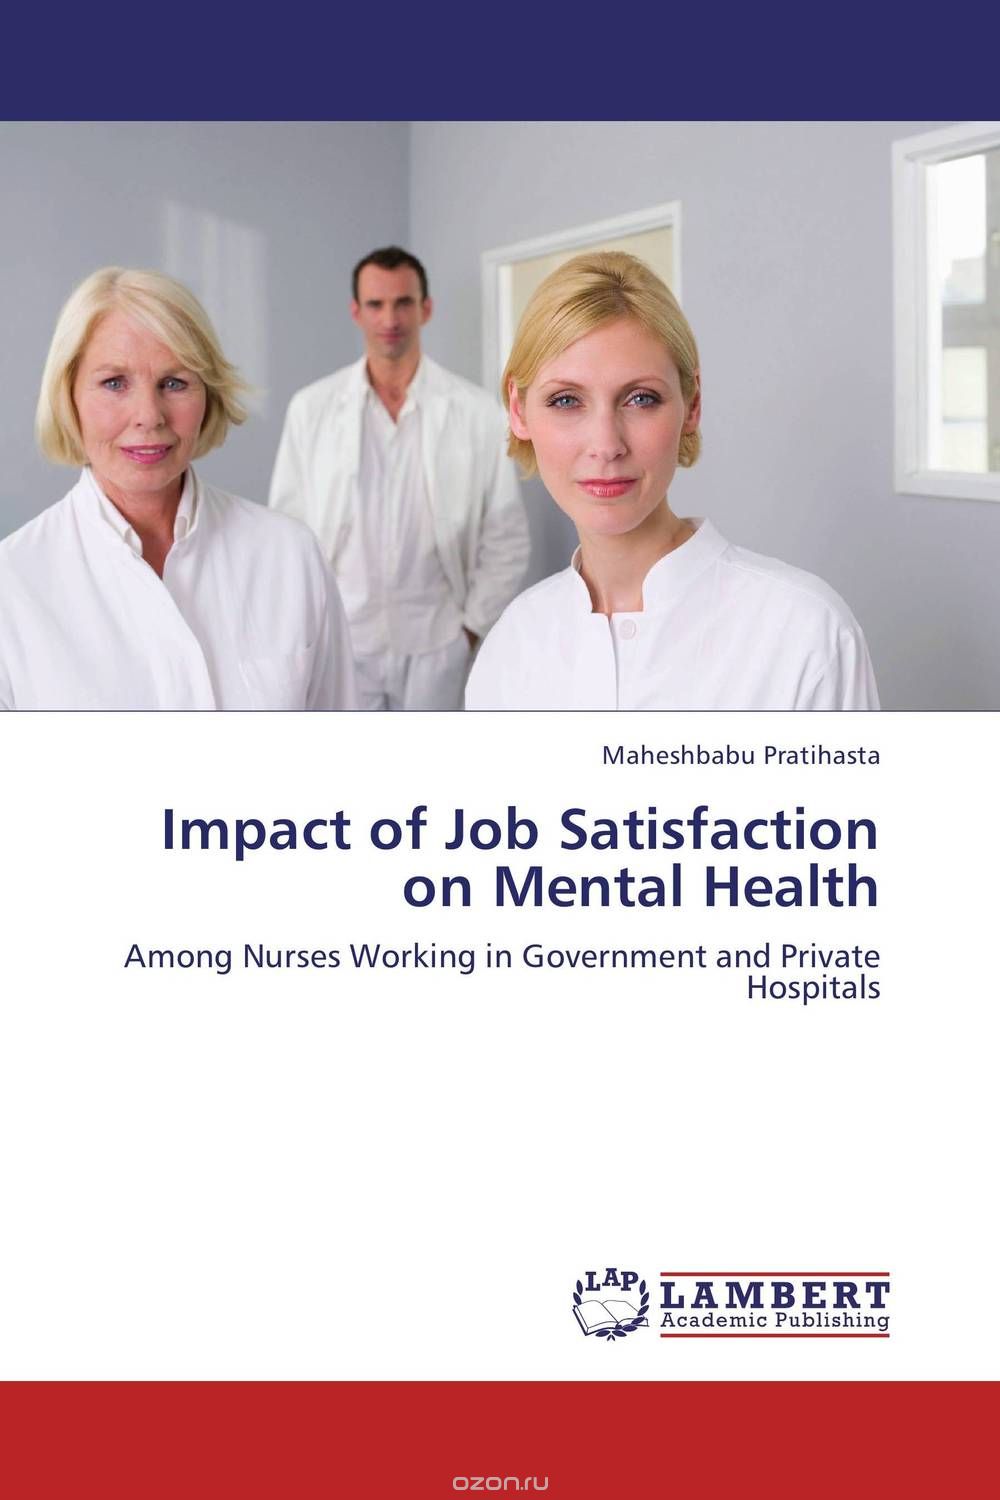 Скачать книгу "Impact of Job Satisfaction on Mental Health"